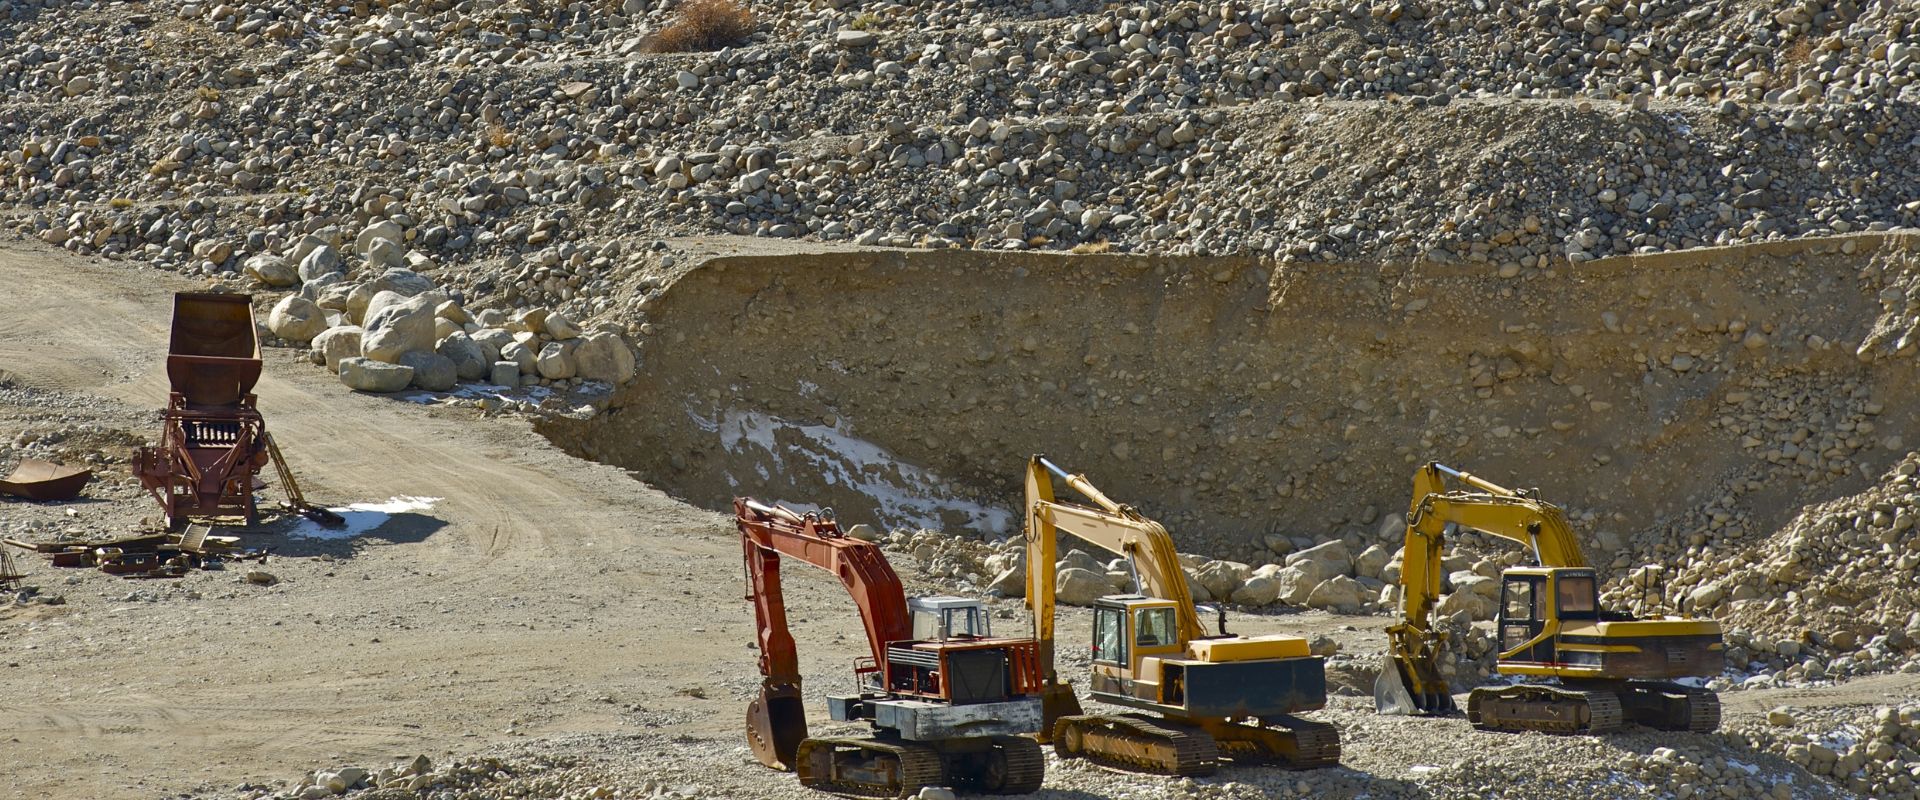 three excavator trucks on gold mining operation